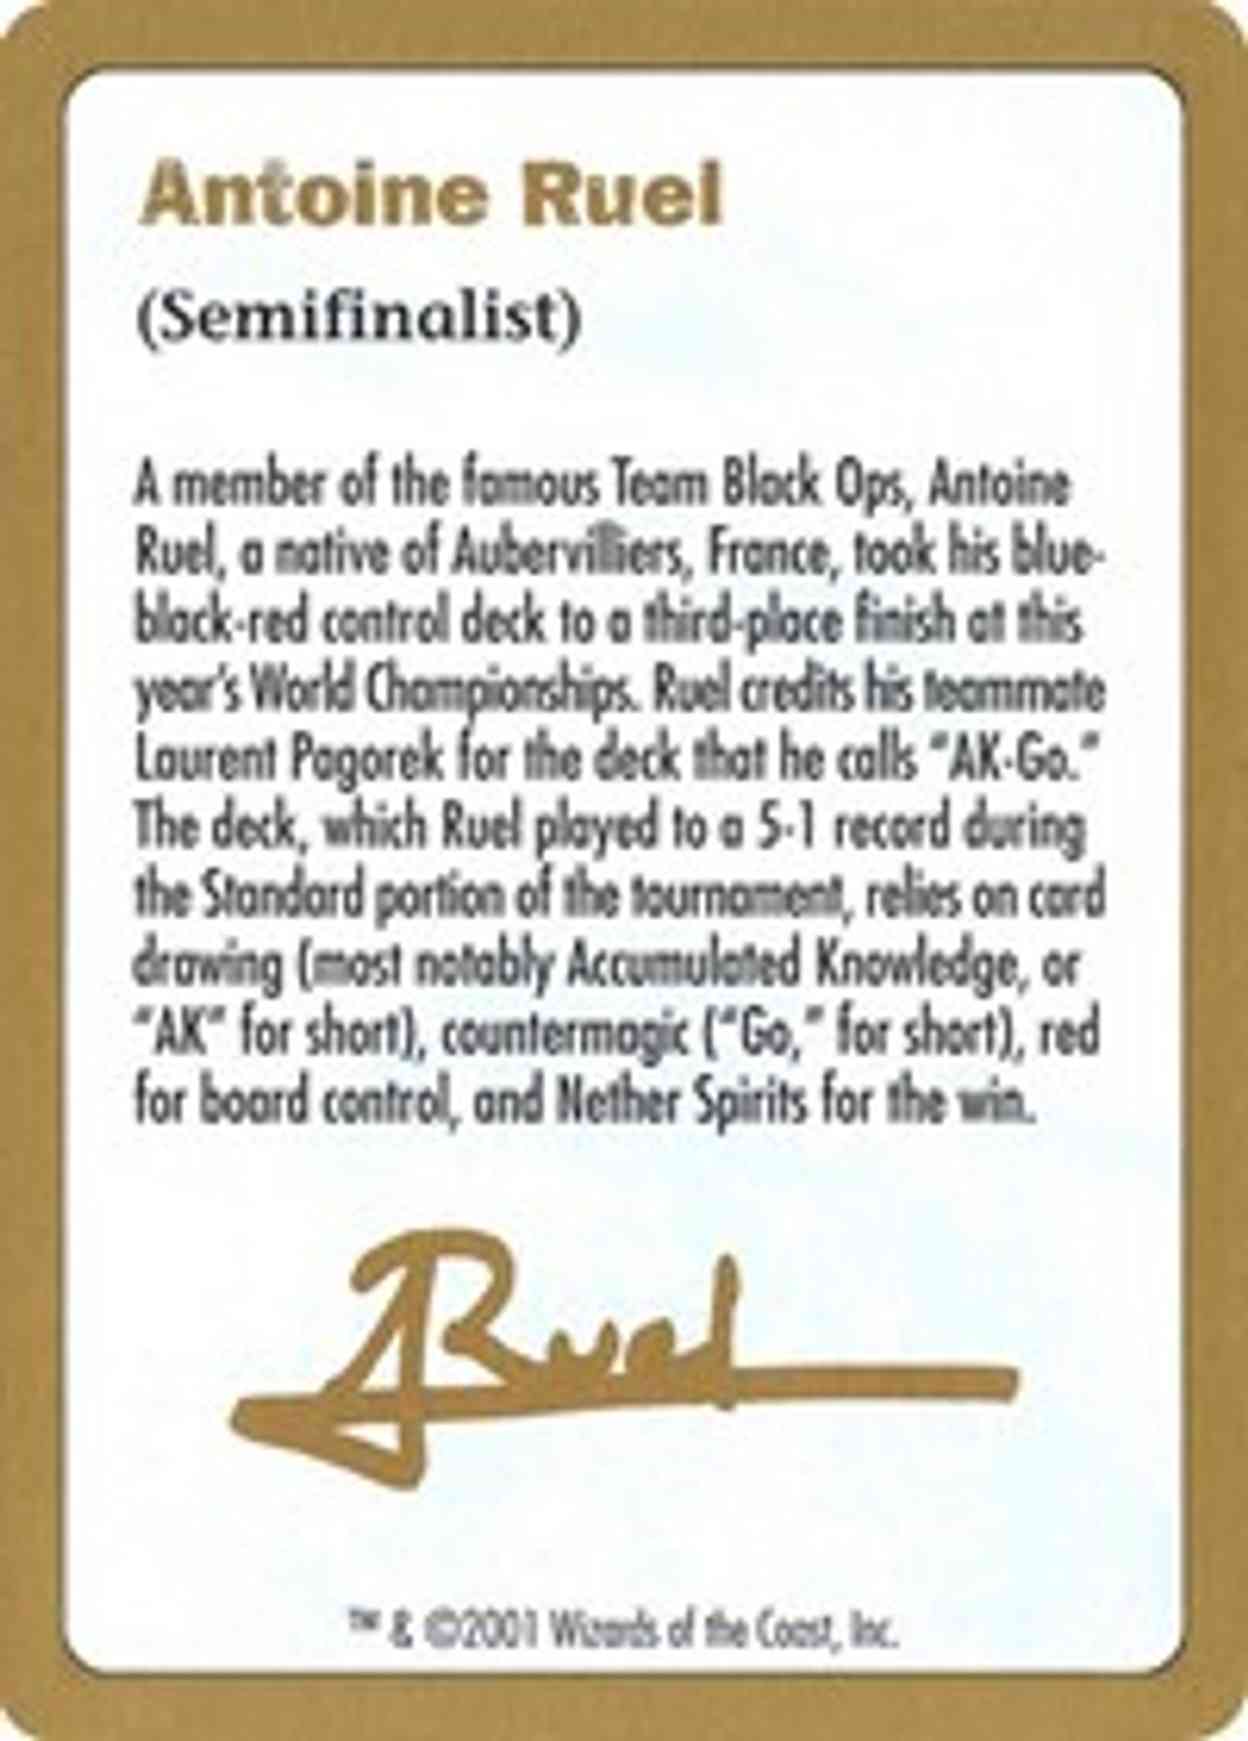 2001 Antoine Ruel Biography Card magic card front